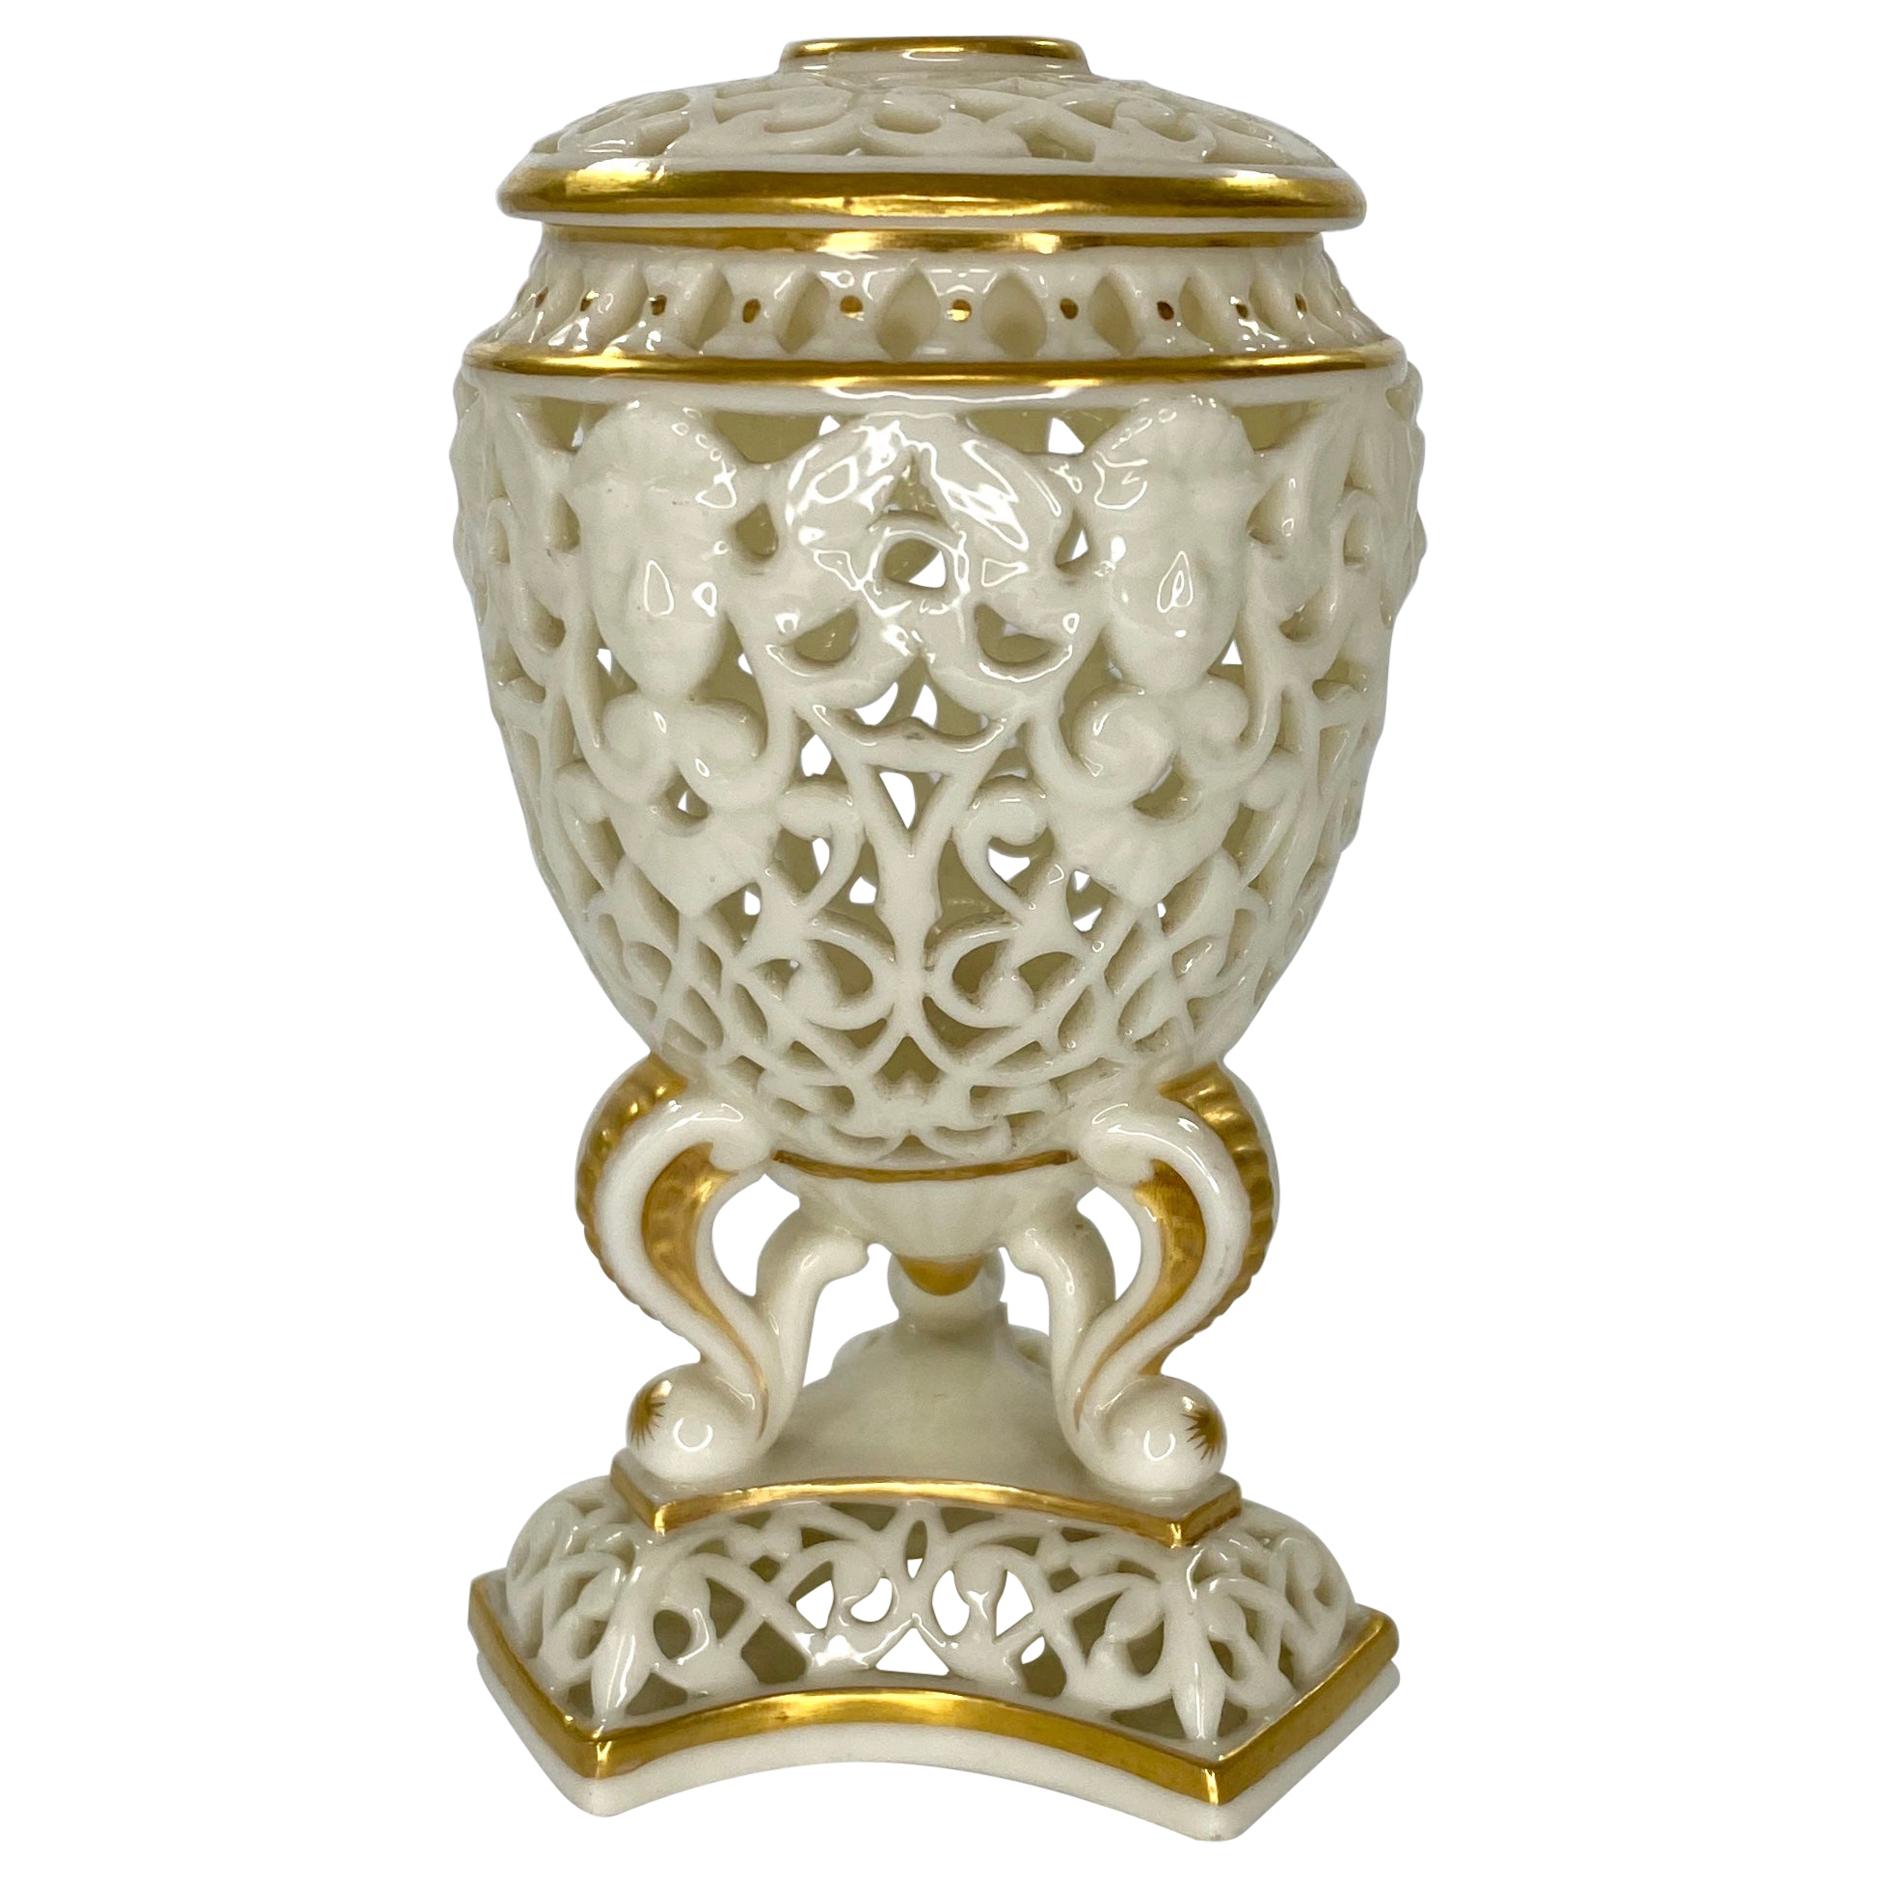 Graingers Royal Worcester Porcelain Vase and Cover, c. 1890